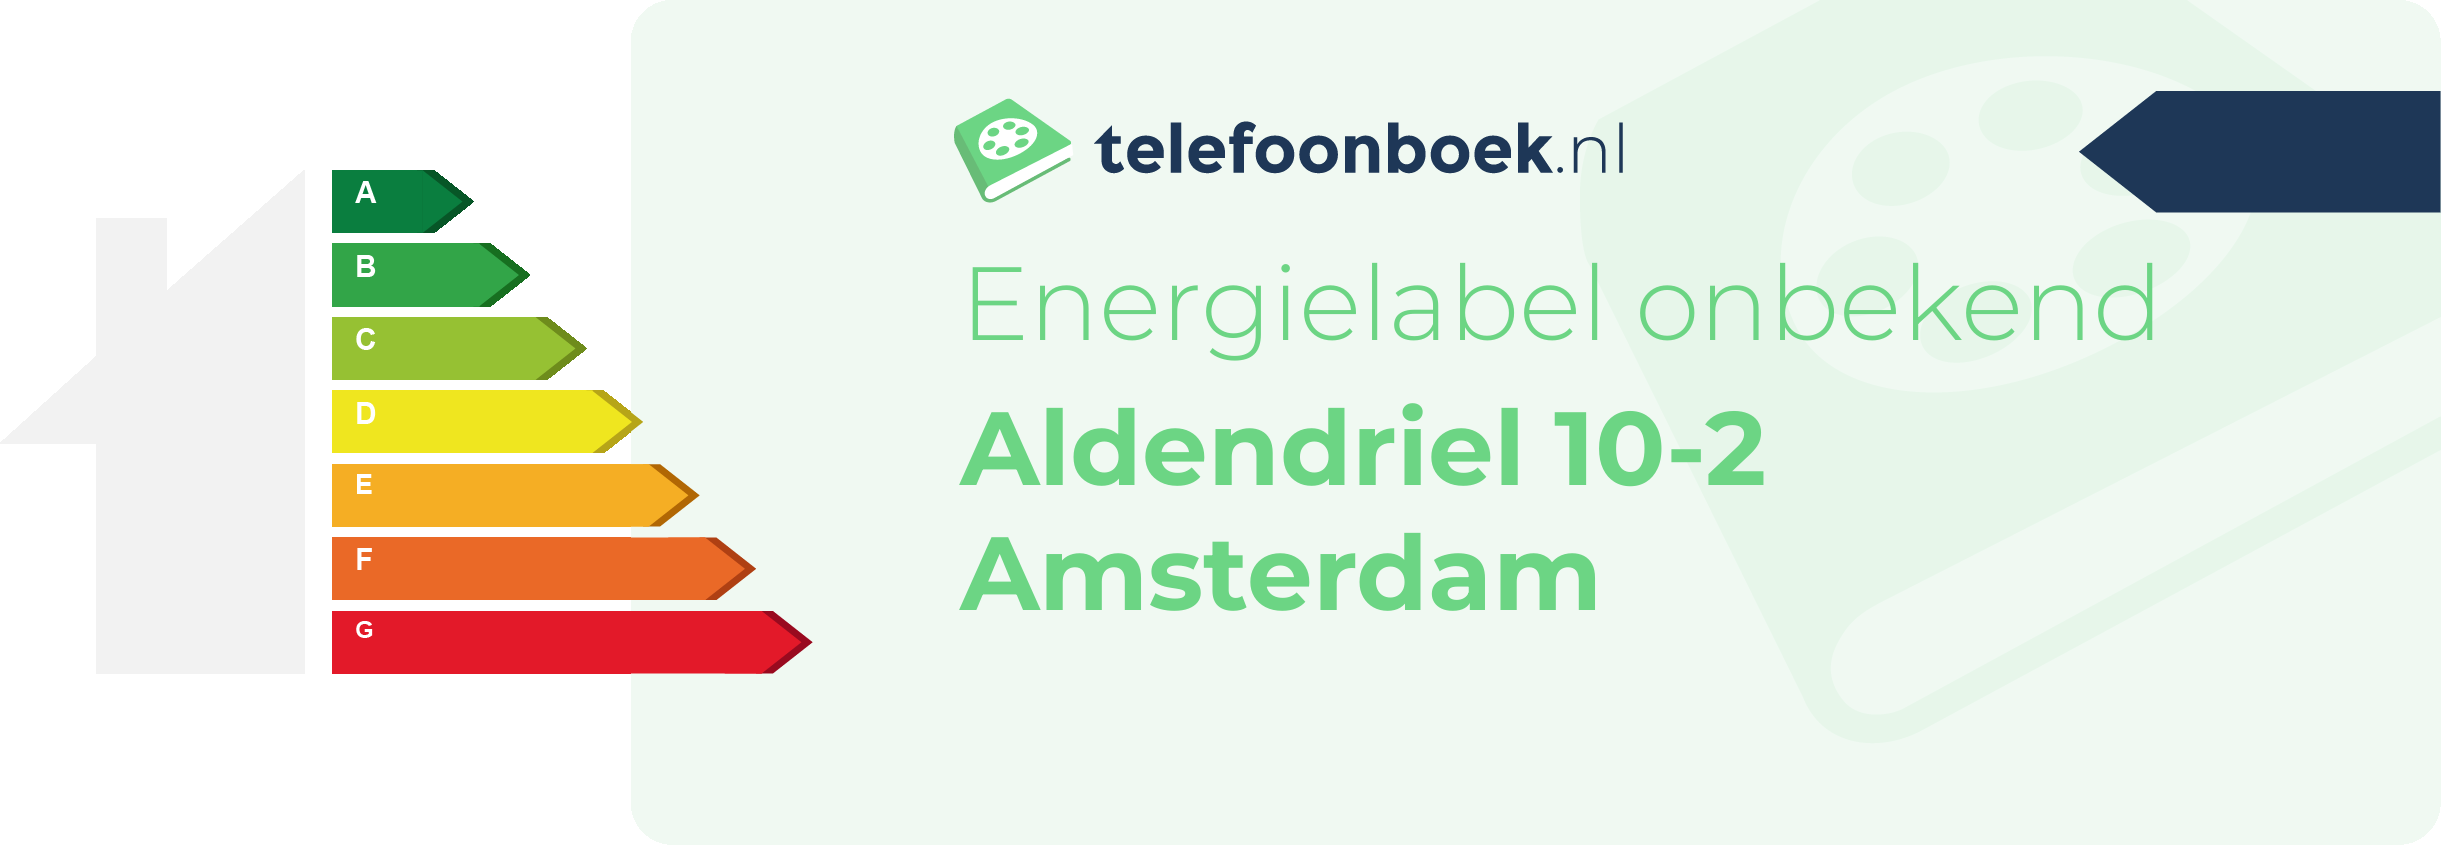 Energielabel Aldendriel 10-2 Amsterdam